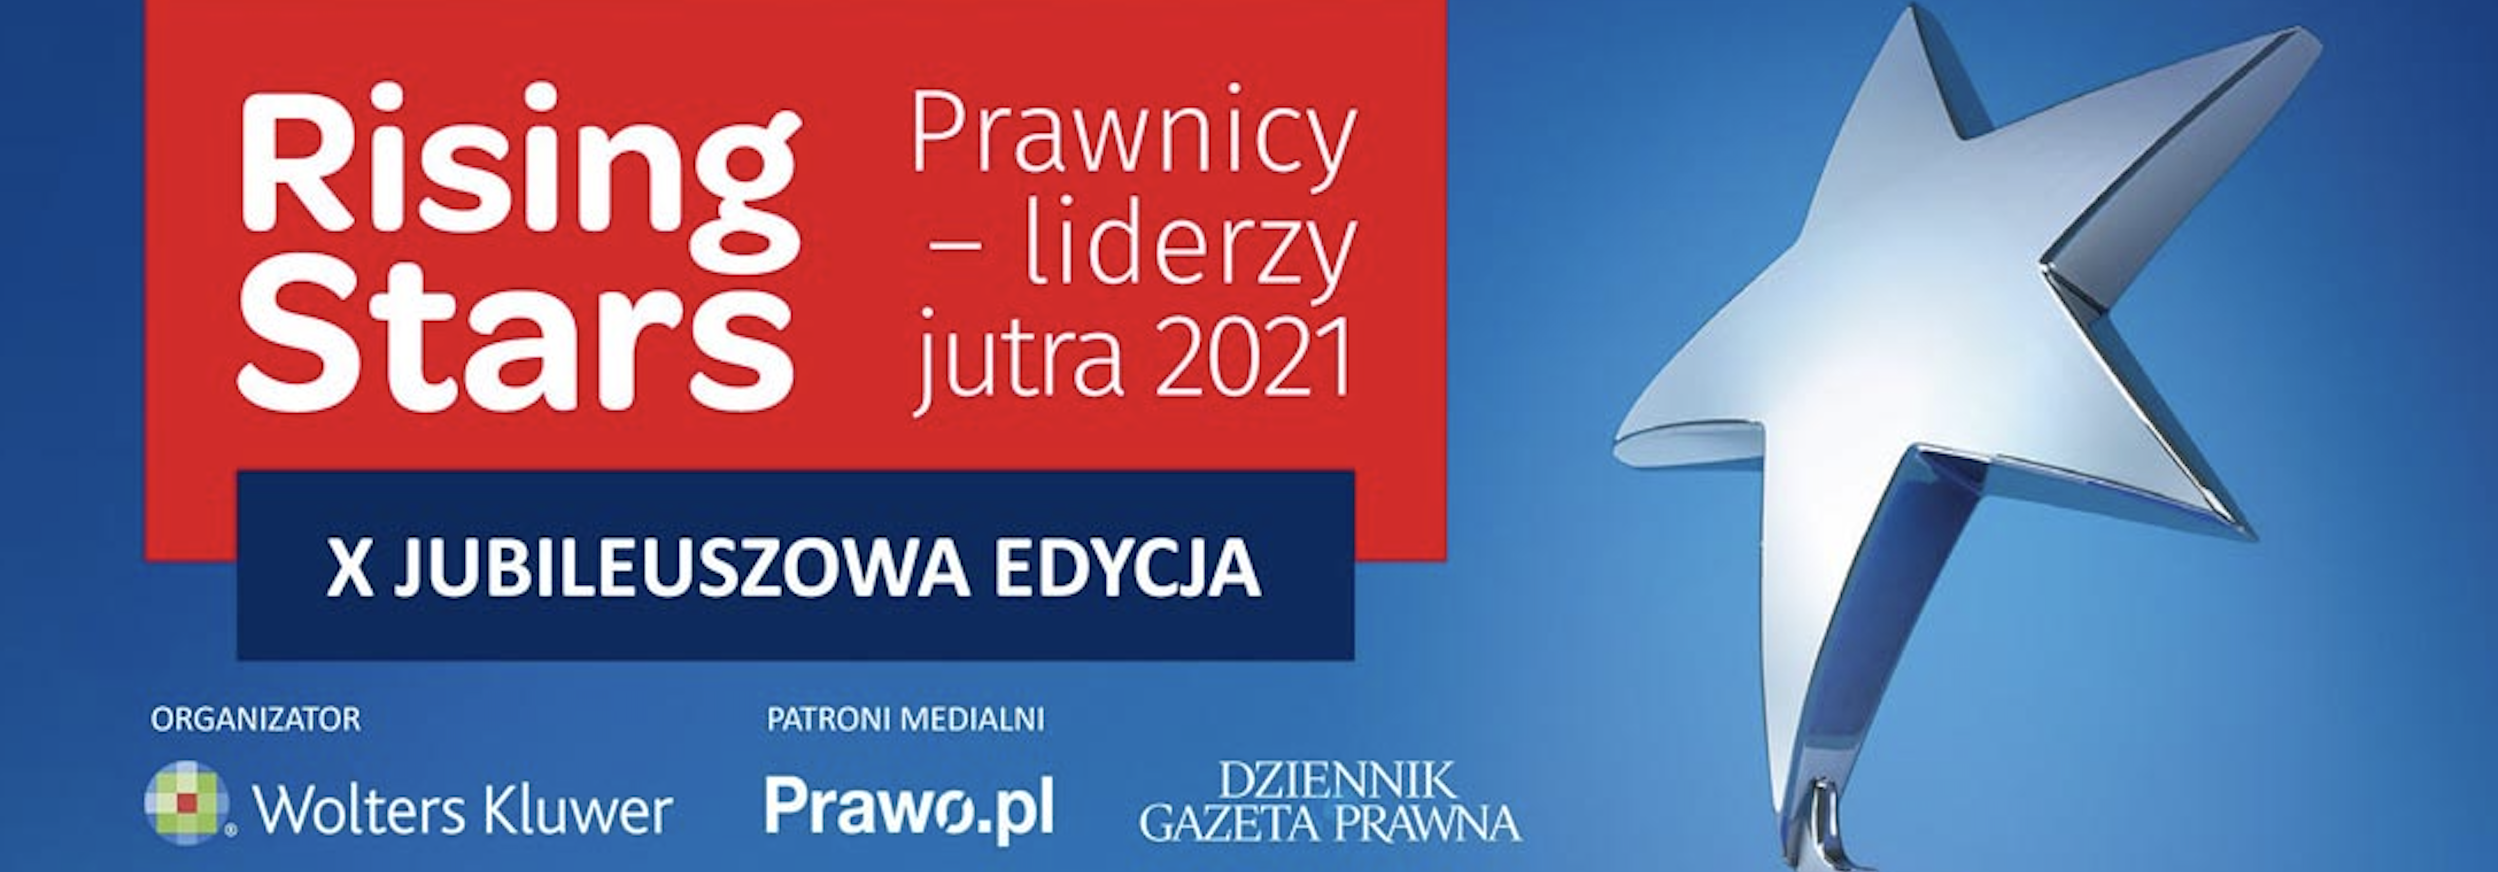 Adwokat dr Maciej Wróbel finalistą konkursu „Rising Stars Prawnicy – Liderzy jutra 2021